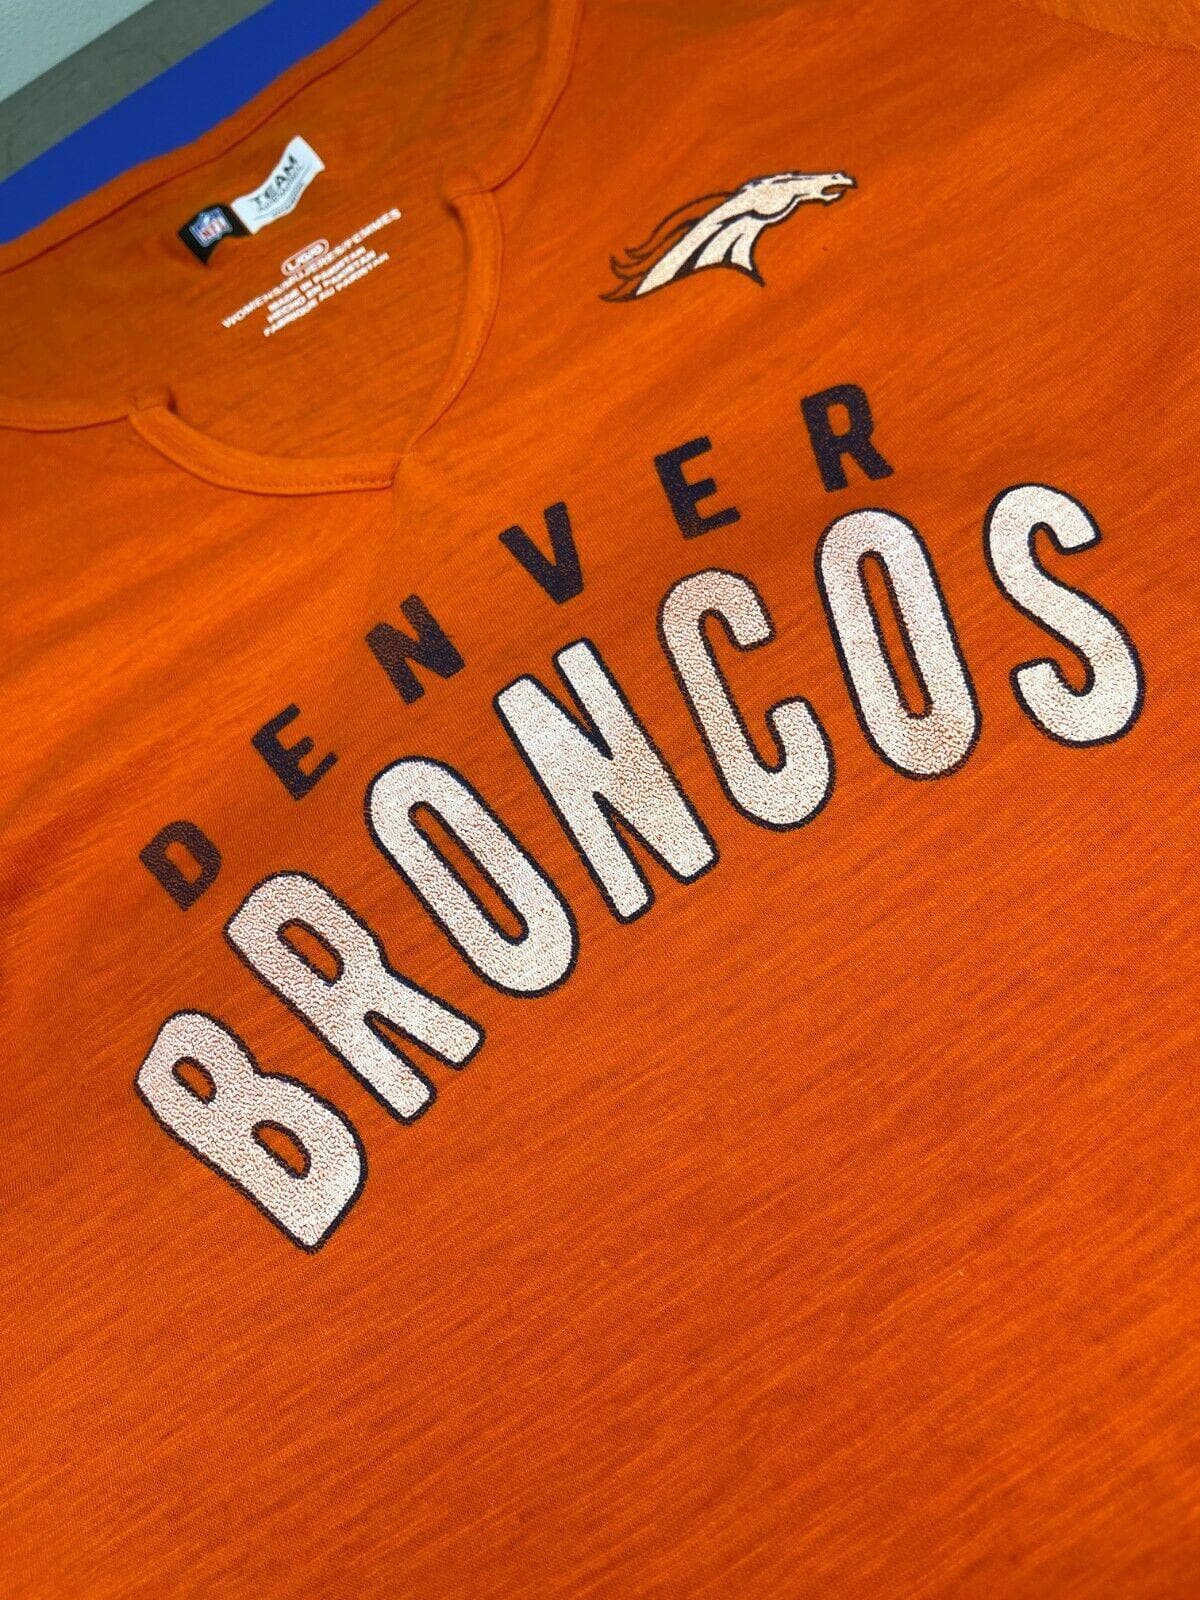 NFL Denver Broncos Notch Neck T-Shirt Women's Large NWT